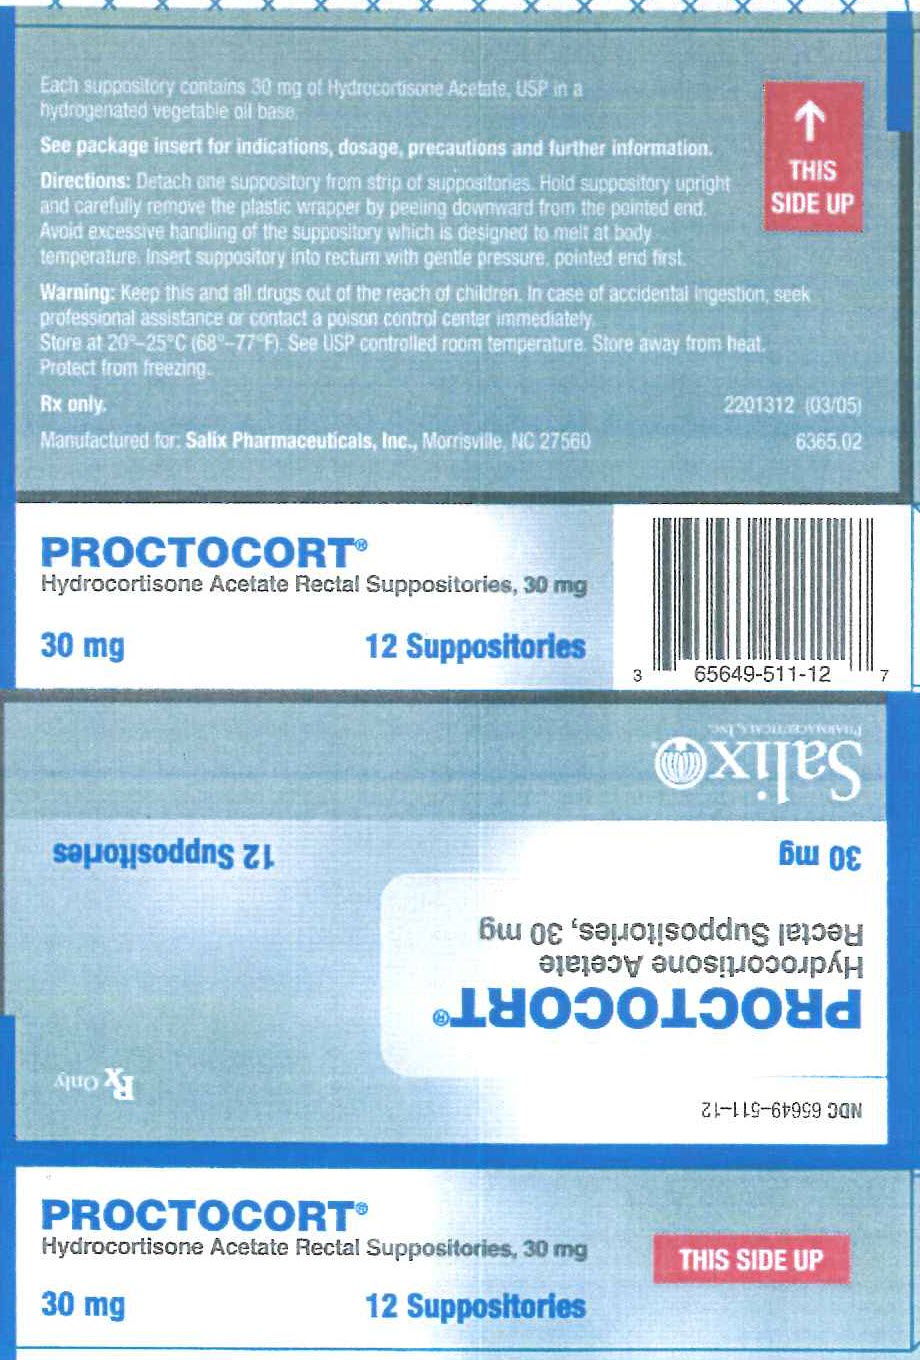 praxbind prescribing information